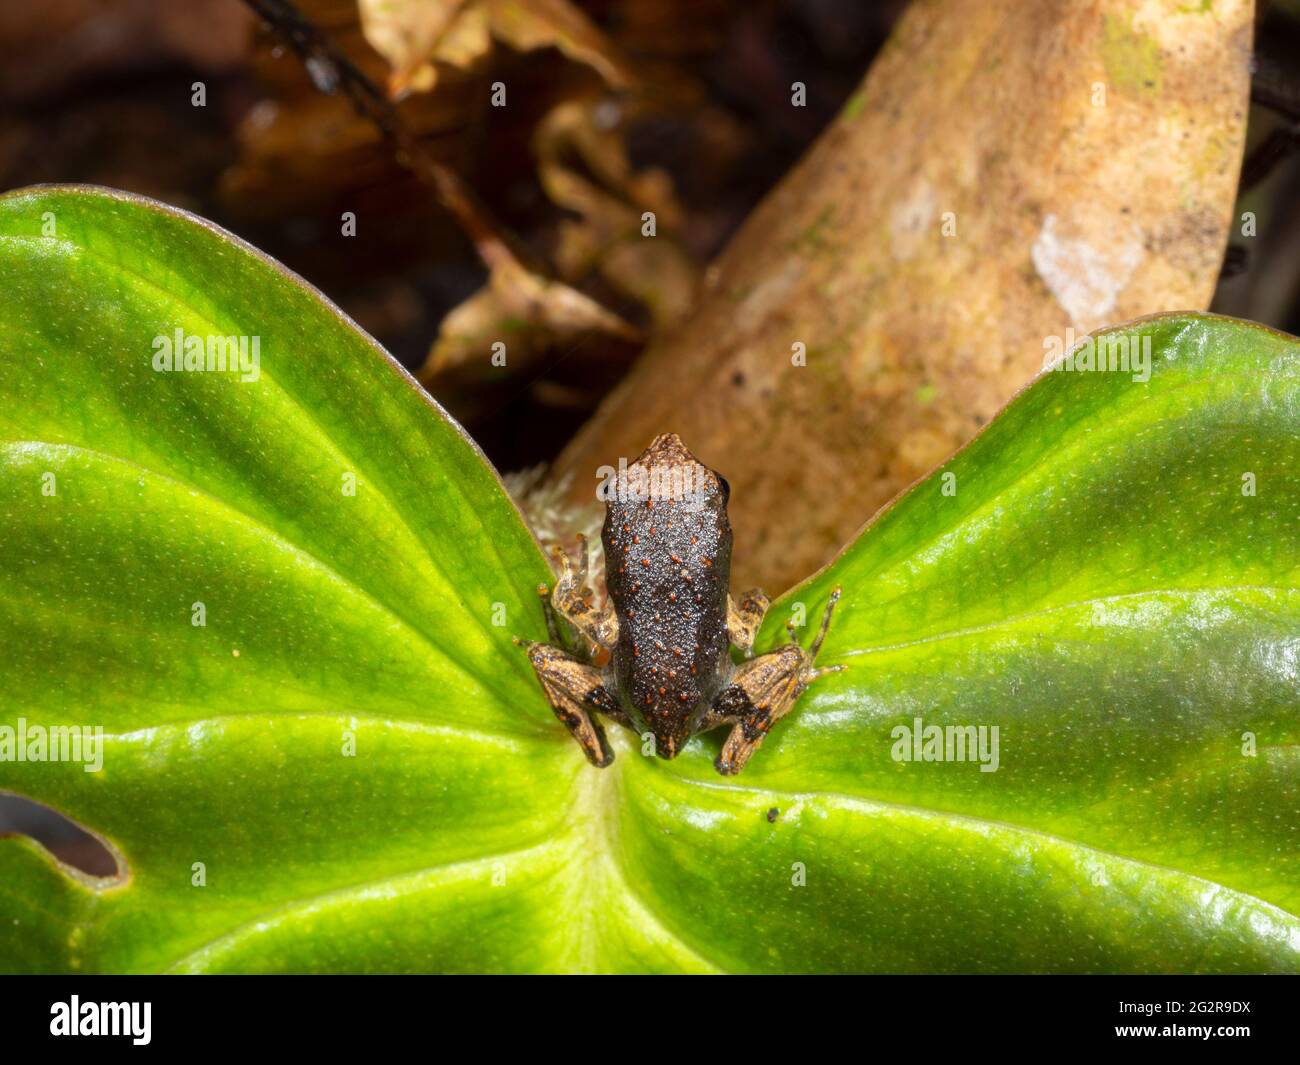 Newly metamorphosed dwarf jungle frog (Engystomops petersi) in the rainforest, Morona Santiago province, Ecuador Stock Photo